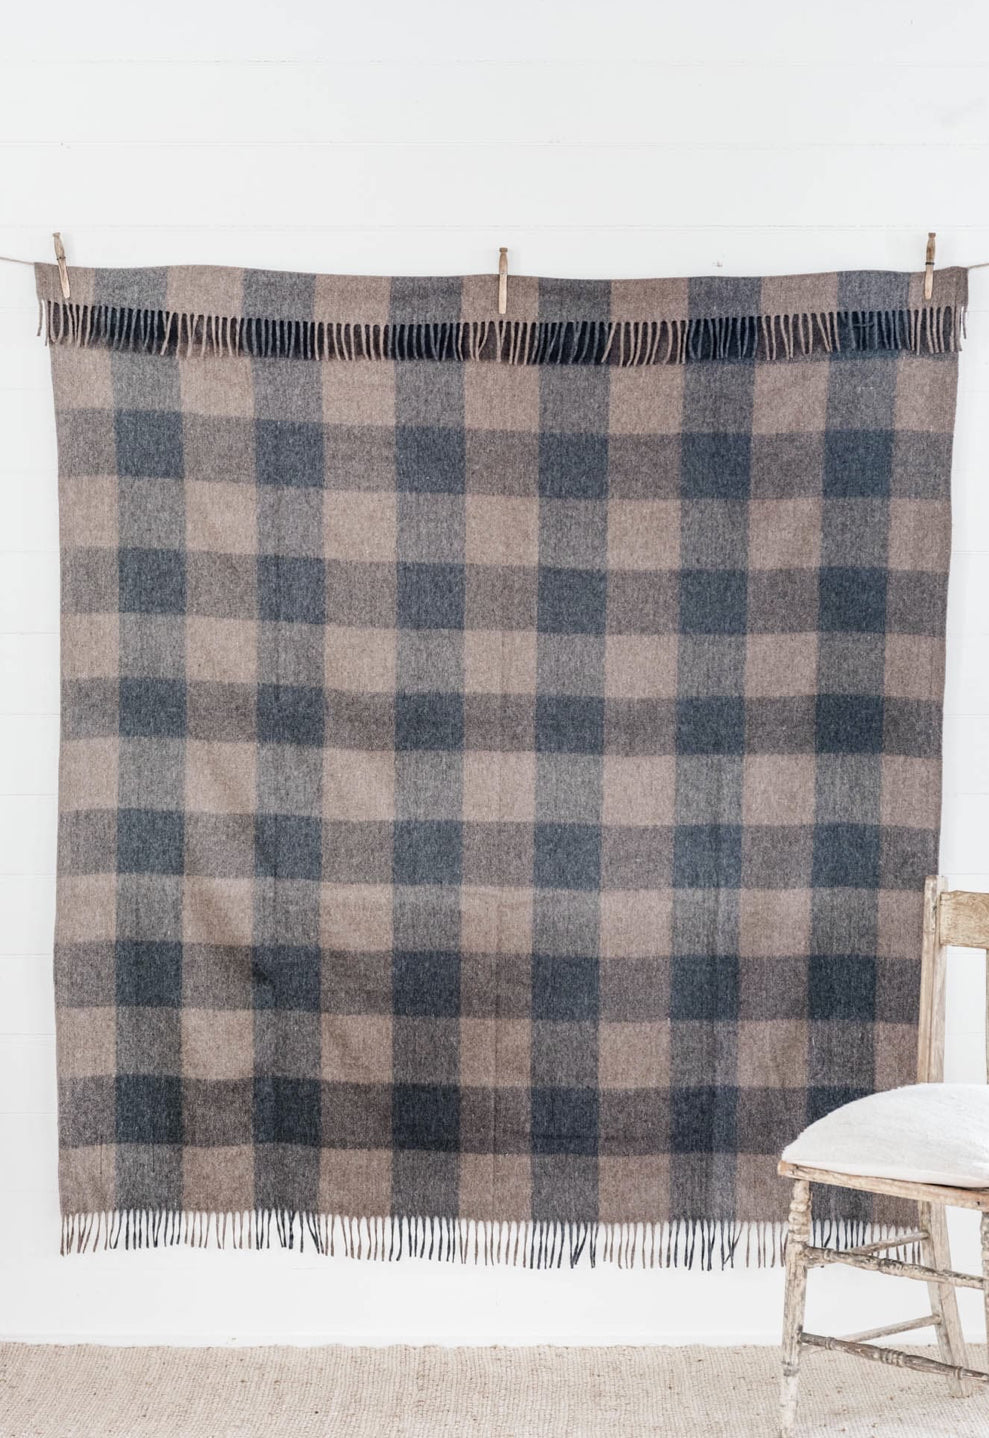 The Grampian Goods Co - Antipodean Collection Blanket: Ash